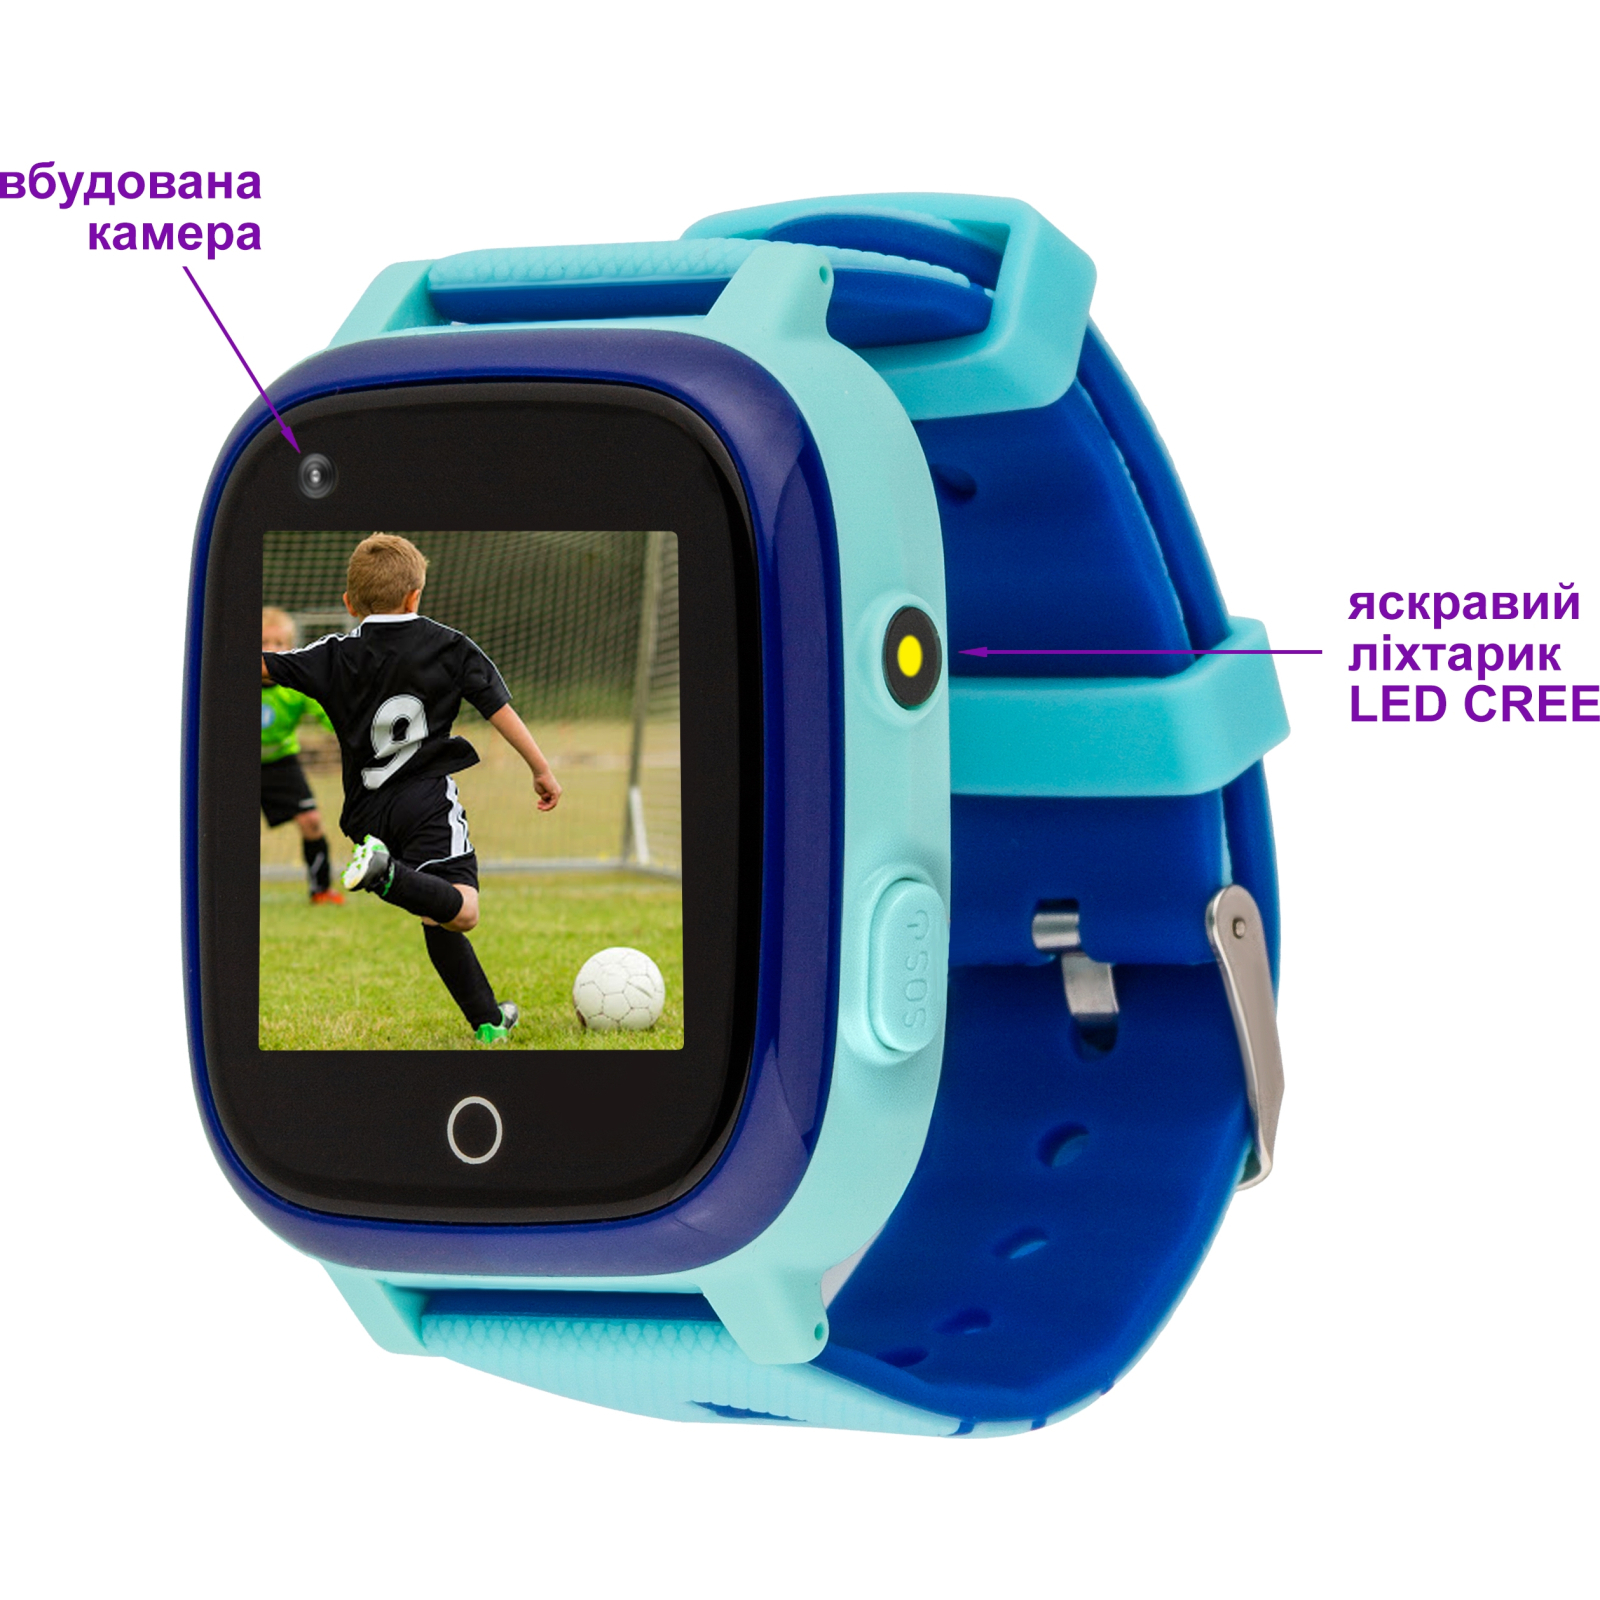 Смарт-часы Amigo GO005 4G WIFI Kids waterproof Thermometer Pink (747018) изображение 4